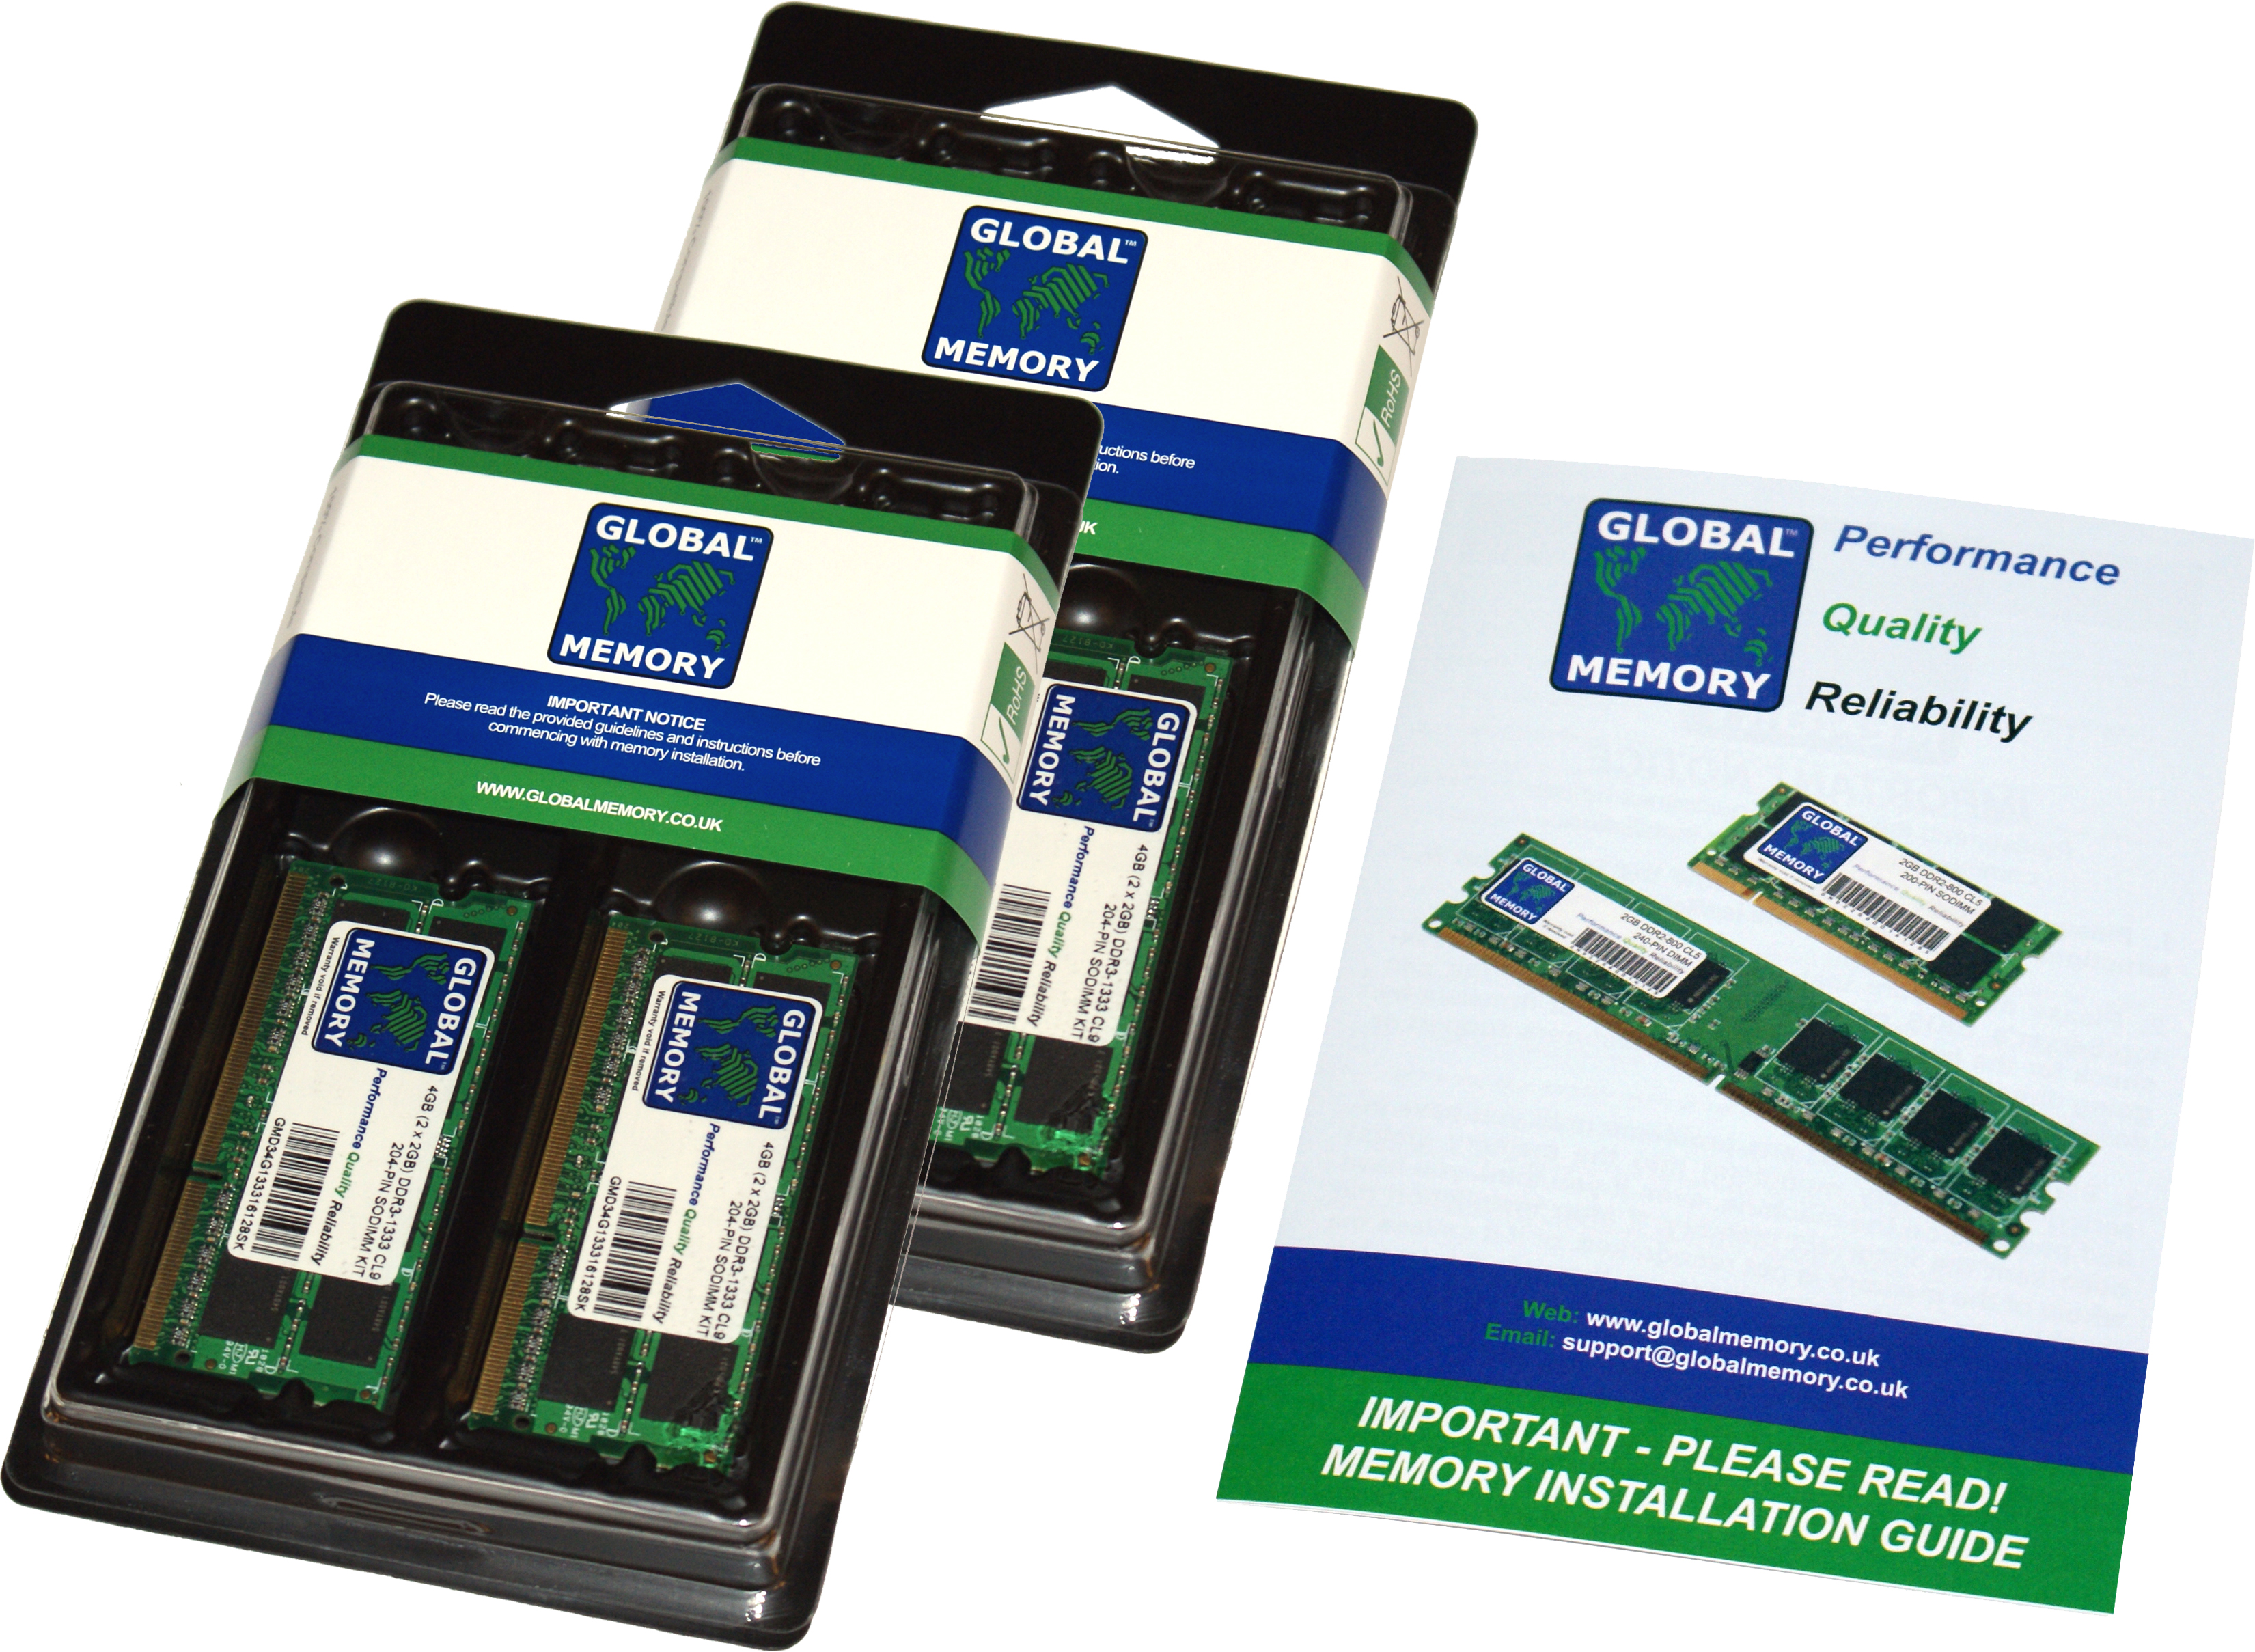 64GB (4 x 16GB) DDR4 2933MHz PC4-23400 260-PIN SODIMM MEMORY RAM KIT FOR TOSHIBA LAPTOPS/NOTEBOOKS